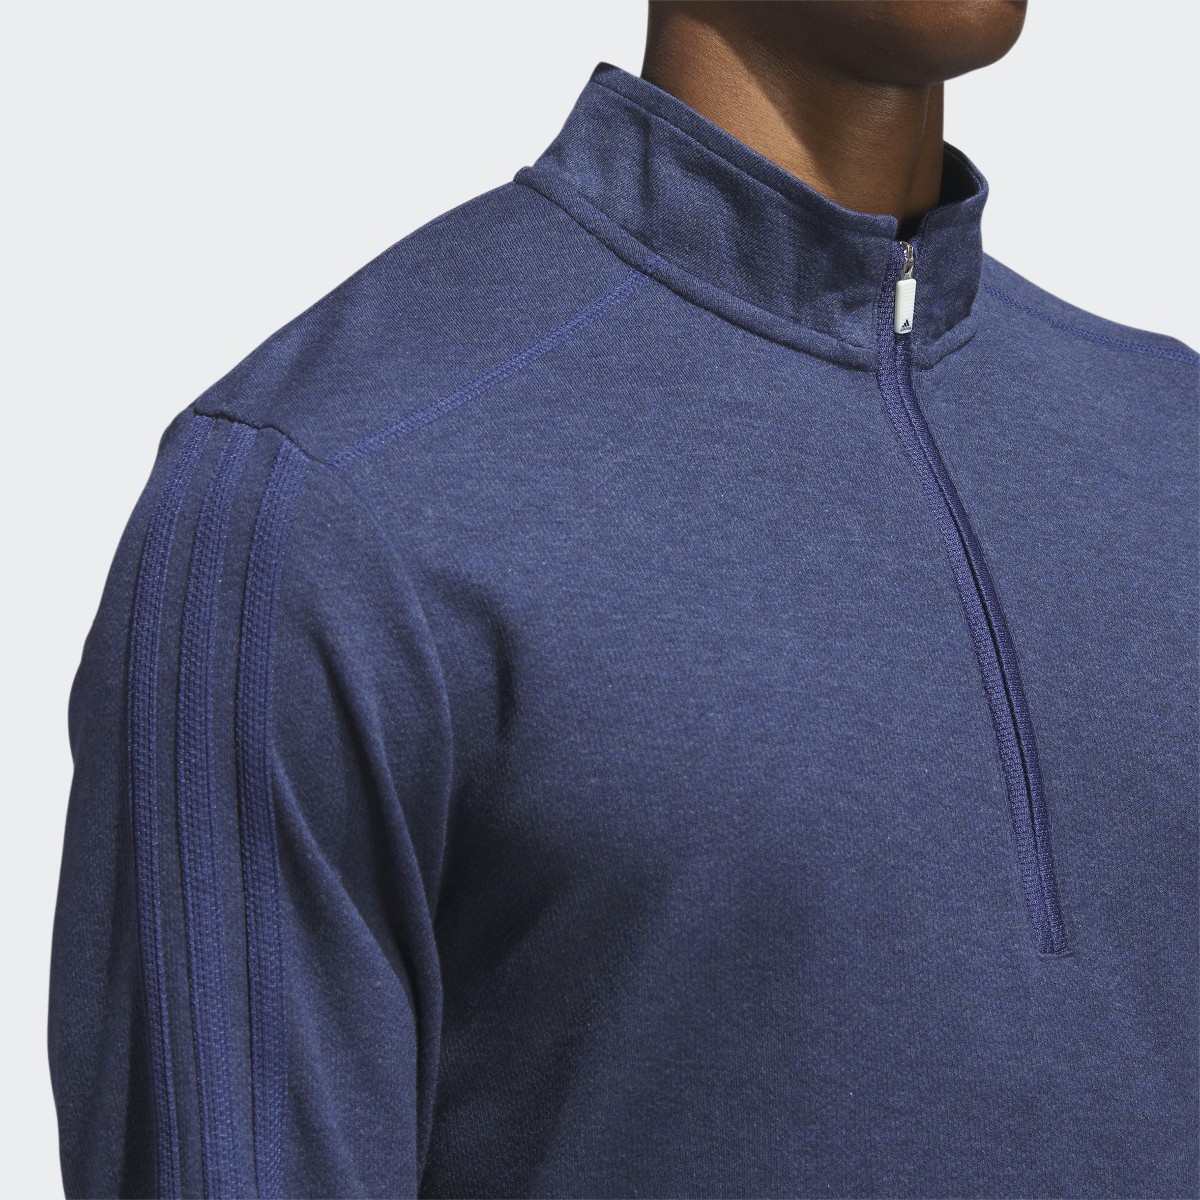 Adidas 3-Stripes Quarter-Zip Pullover. 7